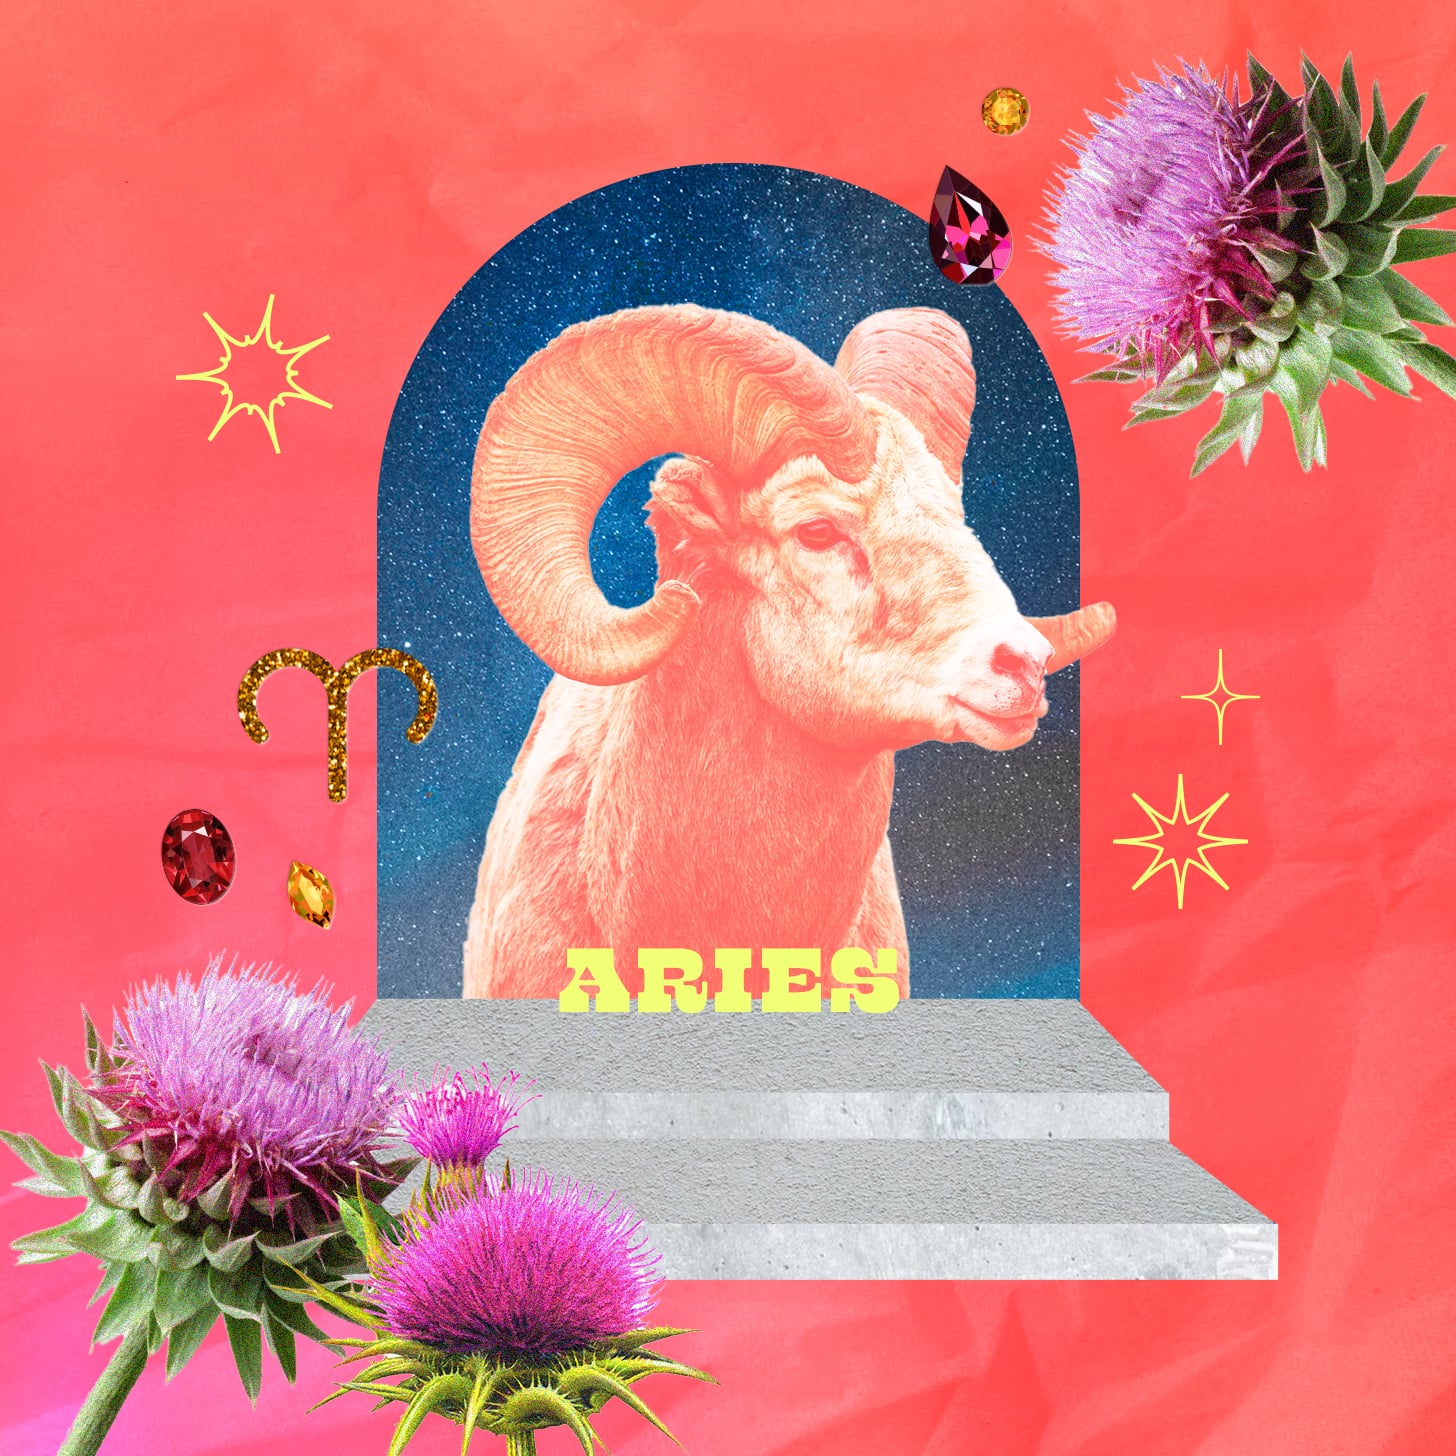 Aries weekly horoscope for week of October 23, 2022